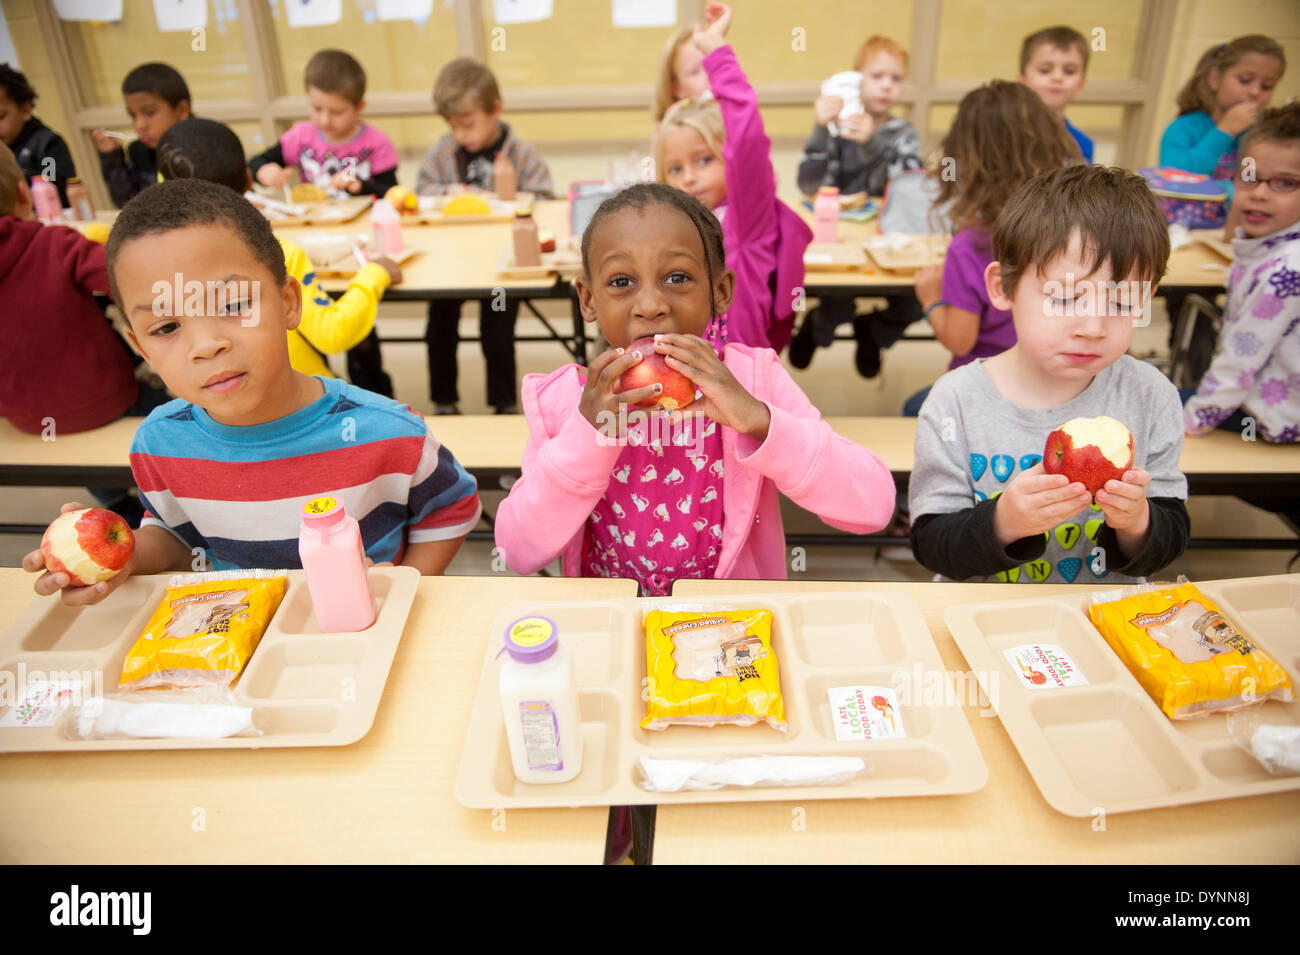 https://c8.alamy.com/comp/DYNN8J/elementary-school-children-sitting-at-tables-eating-apples-in-a-cafeteria-DYNN8J.jpg